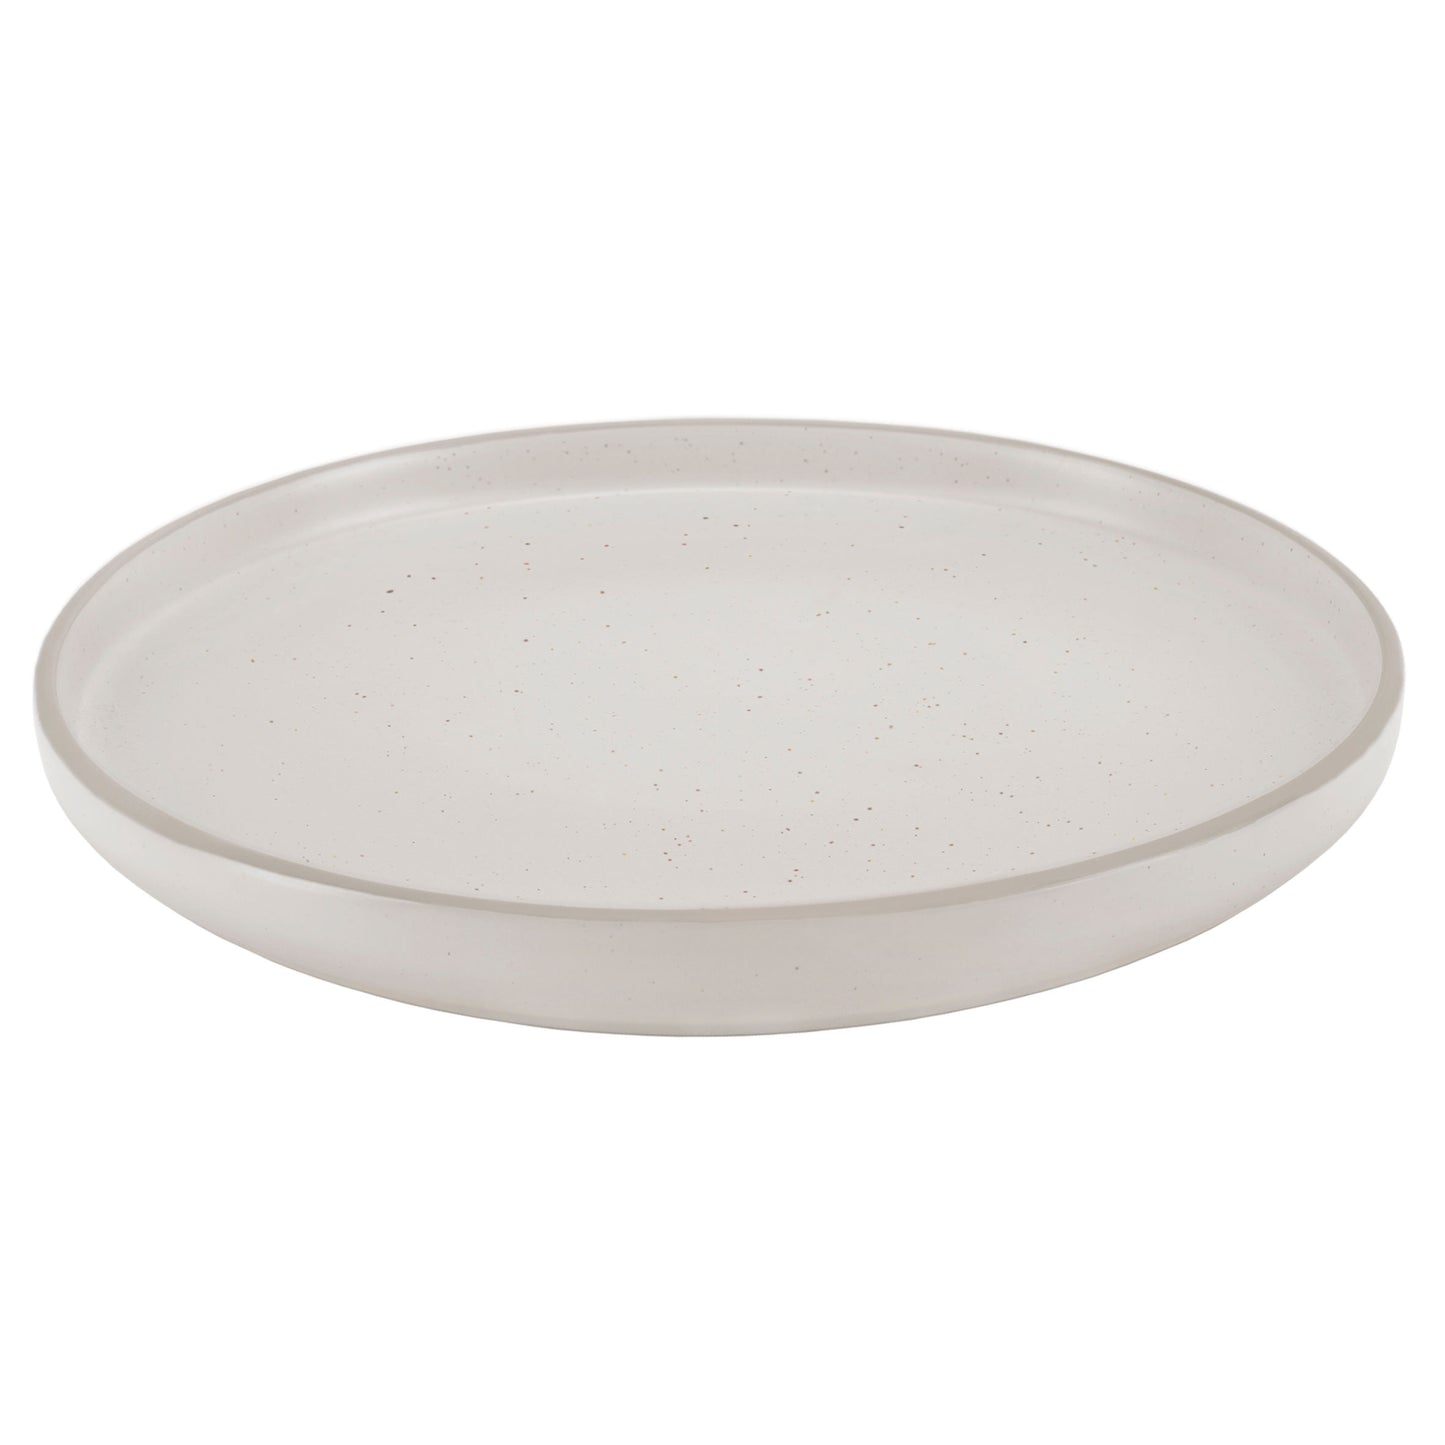 Gorm's Gorm lunch plate off white